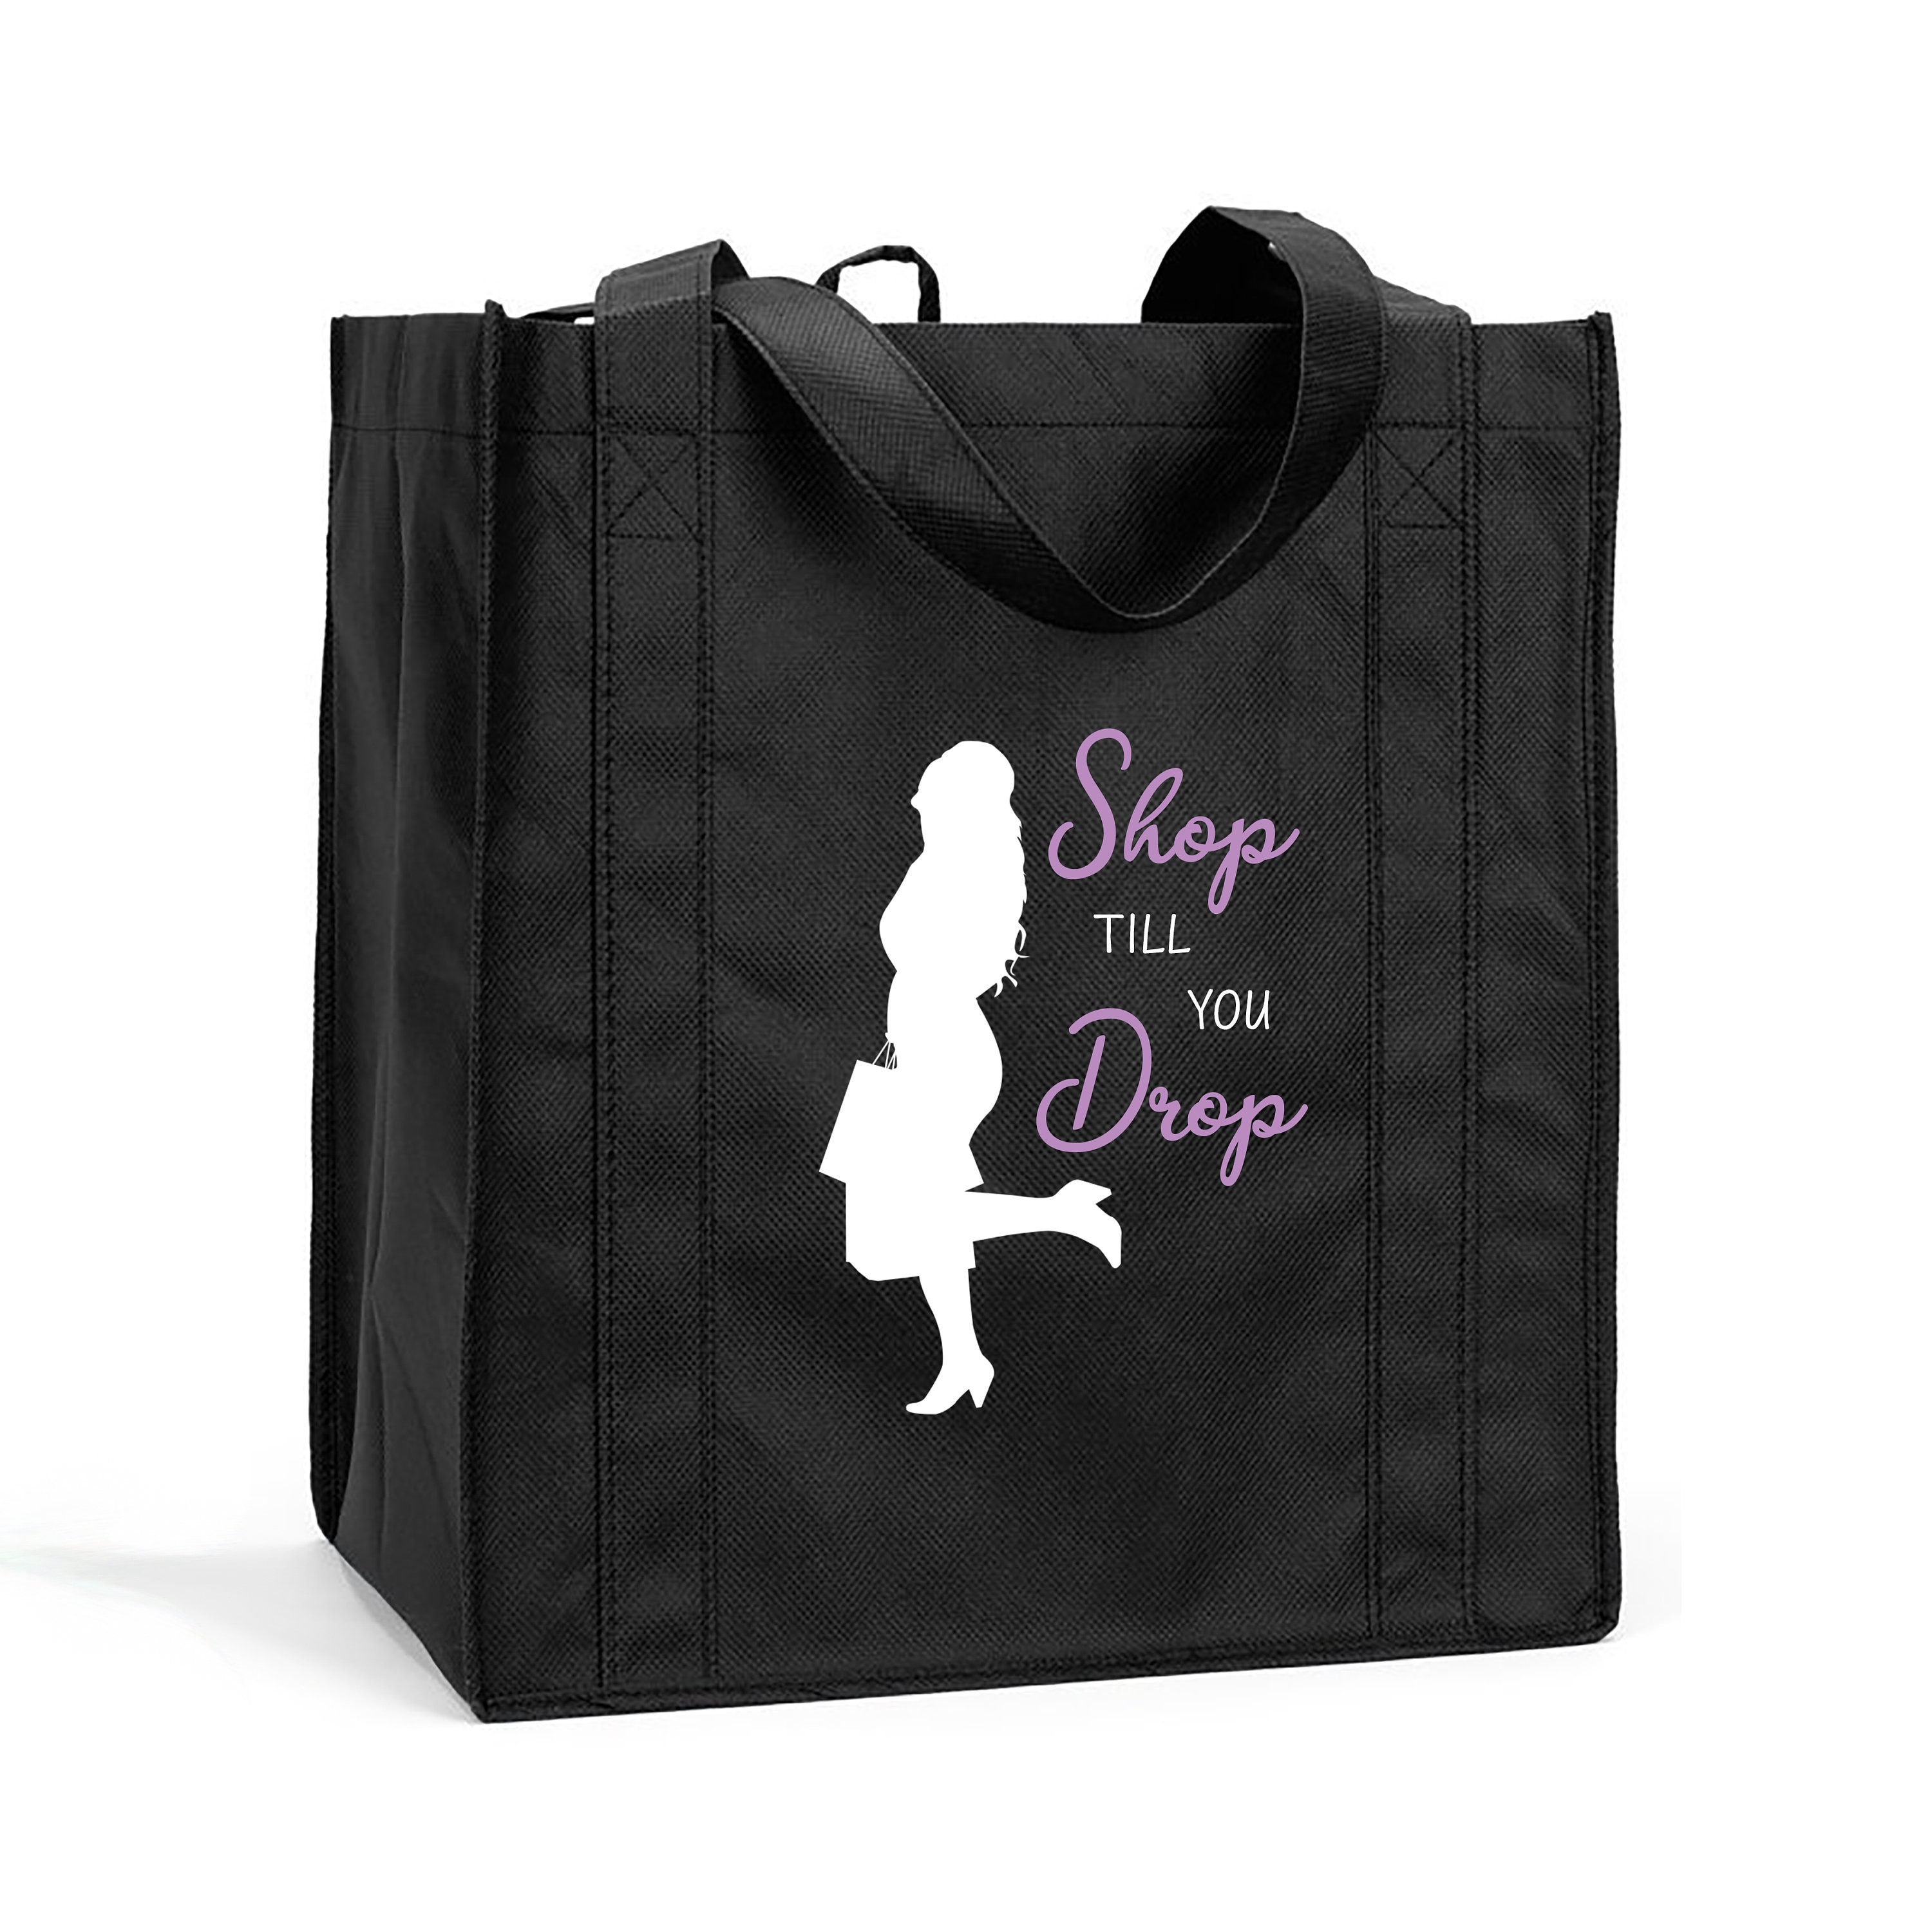 Babes In Bags -- Shop Til You Drop!